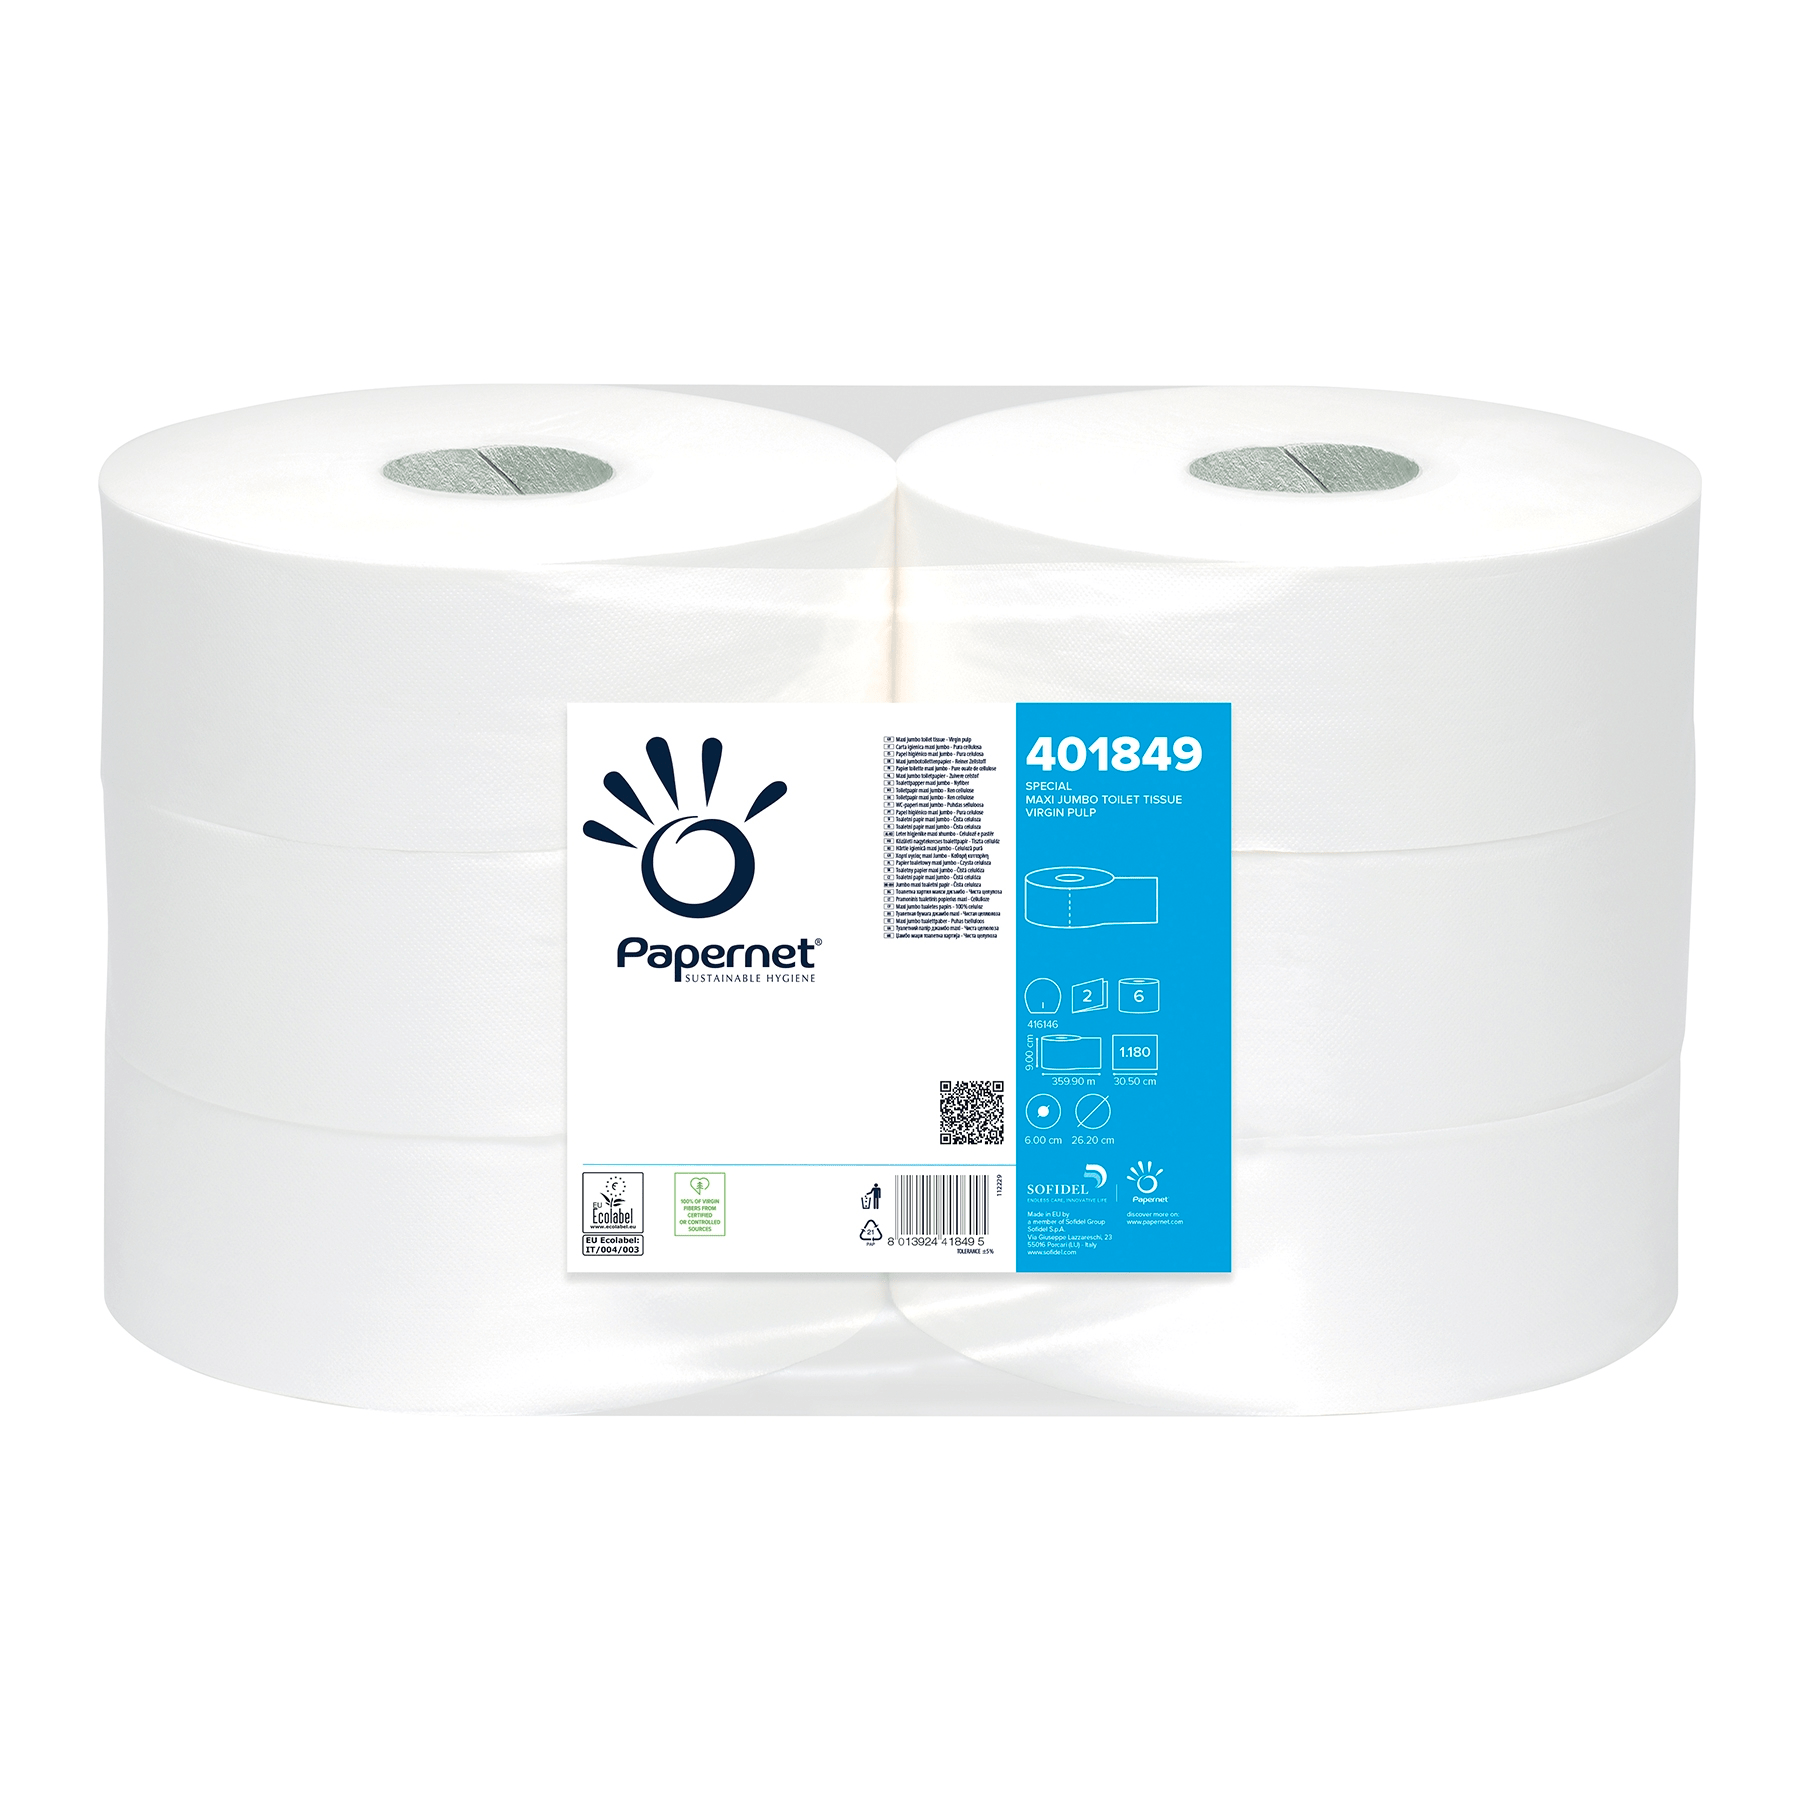 Toilettenpapier 2 lagig 360 m weiß Zellstoff Maxi Jumbo